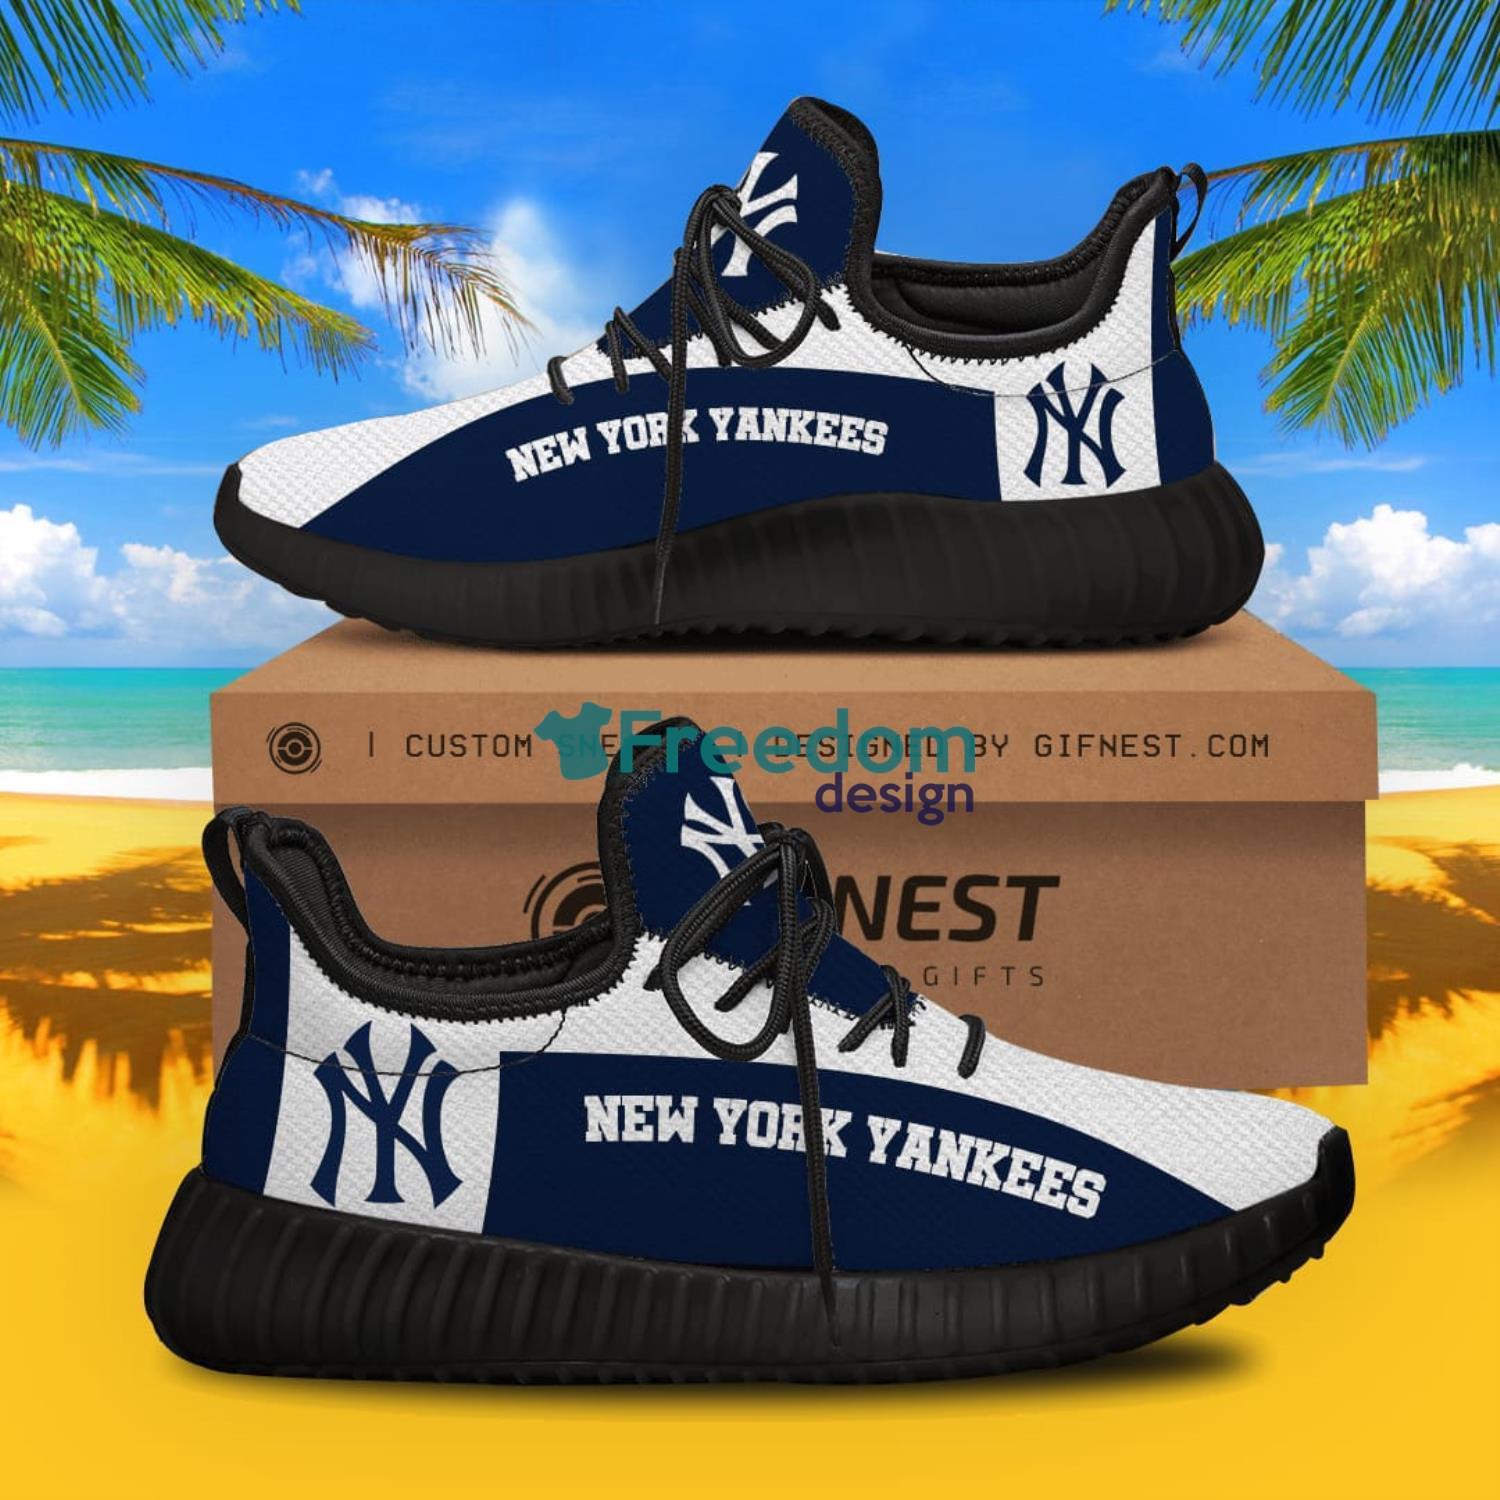 New York Yankees Sport Fans Reze Shoes For Men And Women